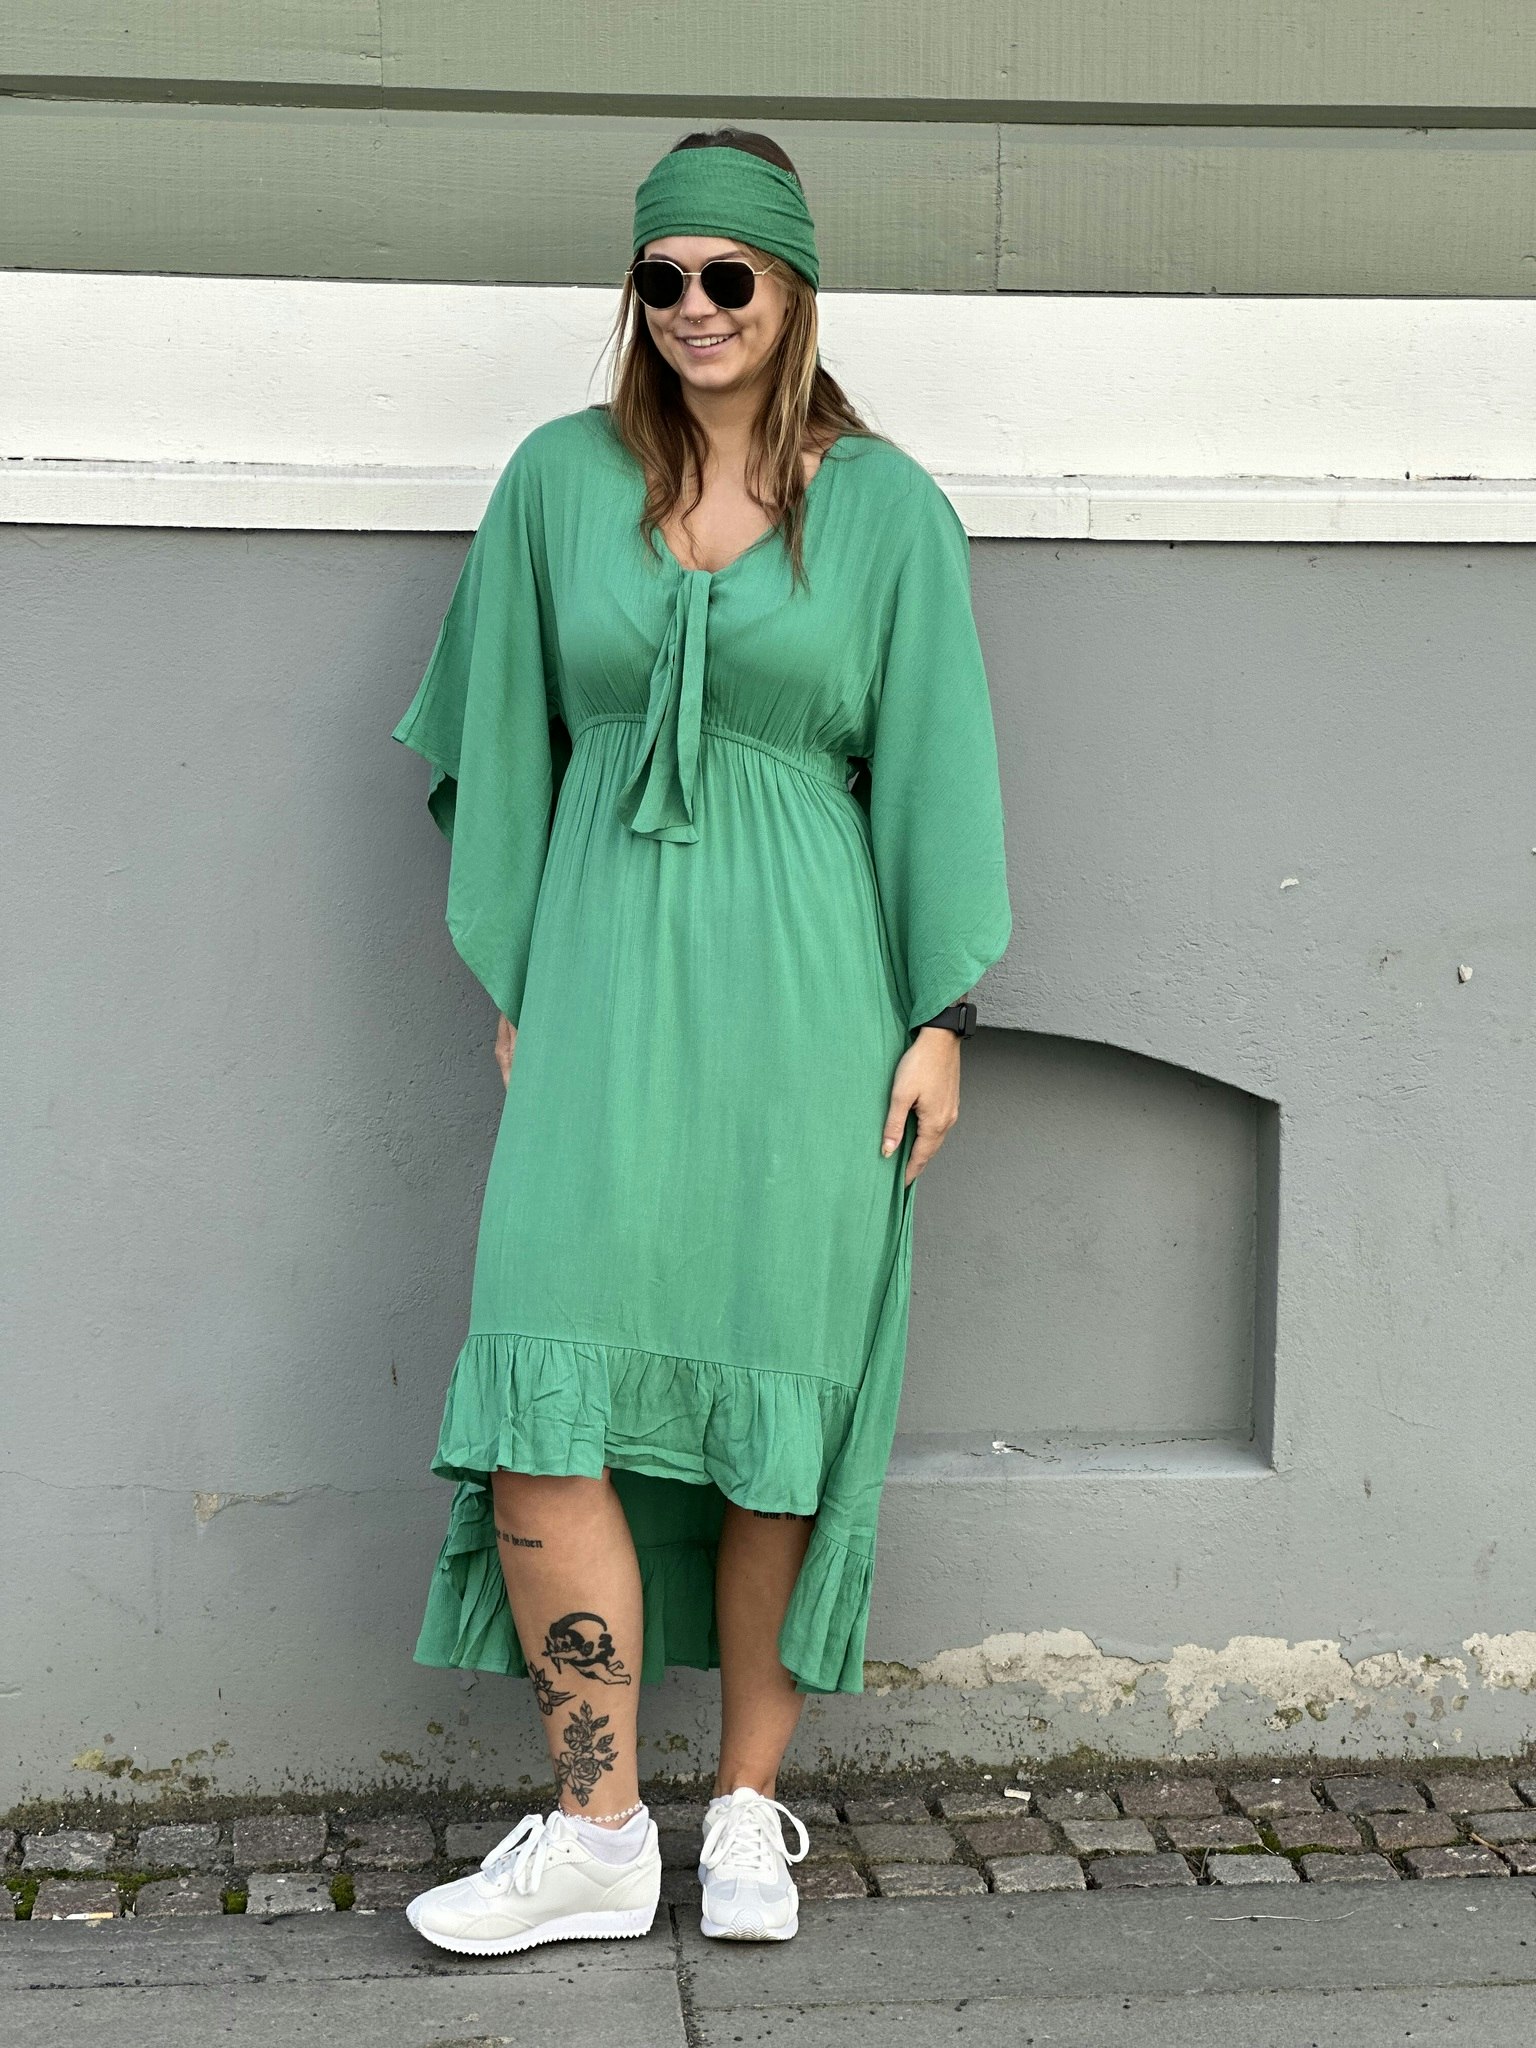 Grön klänning ARIEL dress